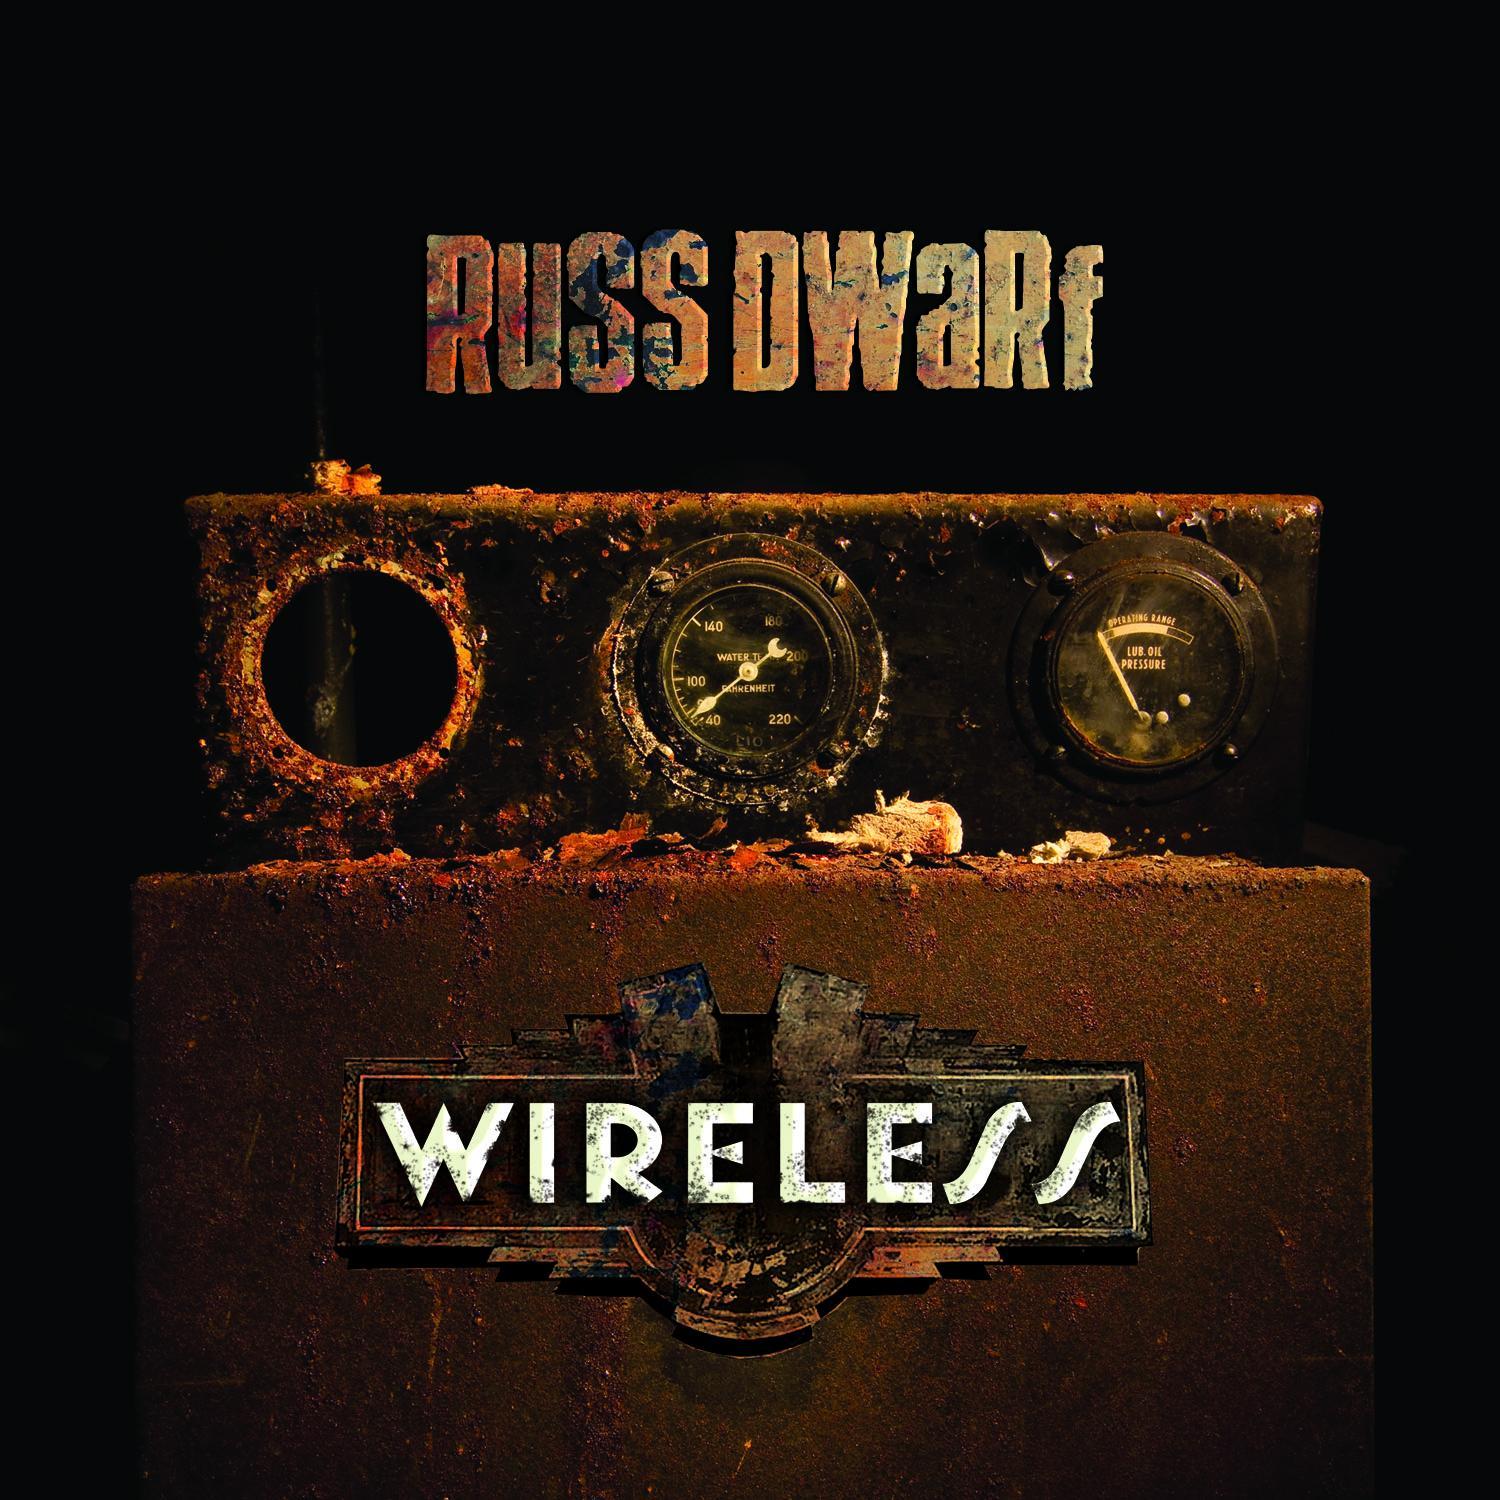 Russ Dwarf Graham (Killer Dwarfs,Moxy & Hardroad)
Co-founder of KILLER DWARFS. Order new CD Wireless now! https://t.co/9aNaoTI72m 
New music coming 2020 on EMP